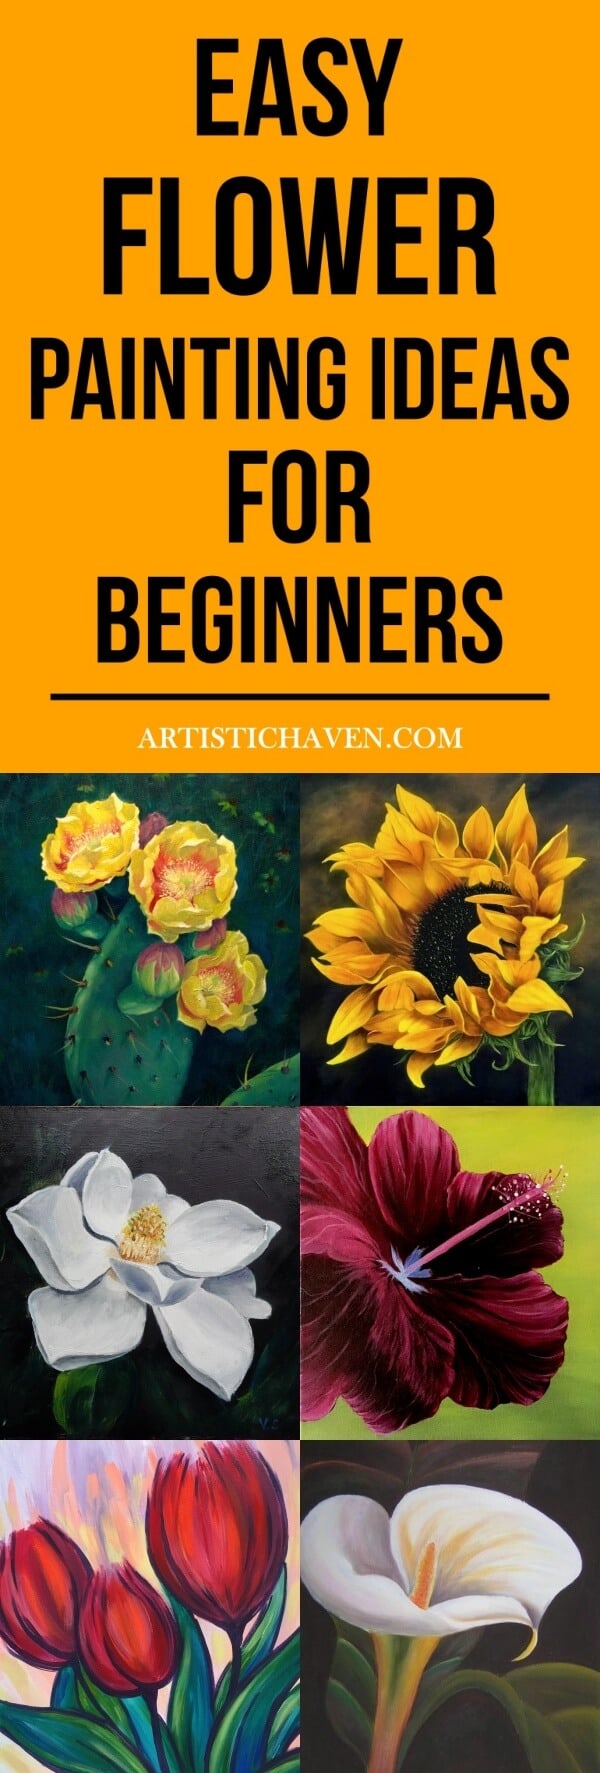 Easy Flower Painting Ideas For Beginners